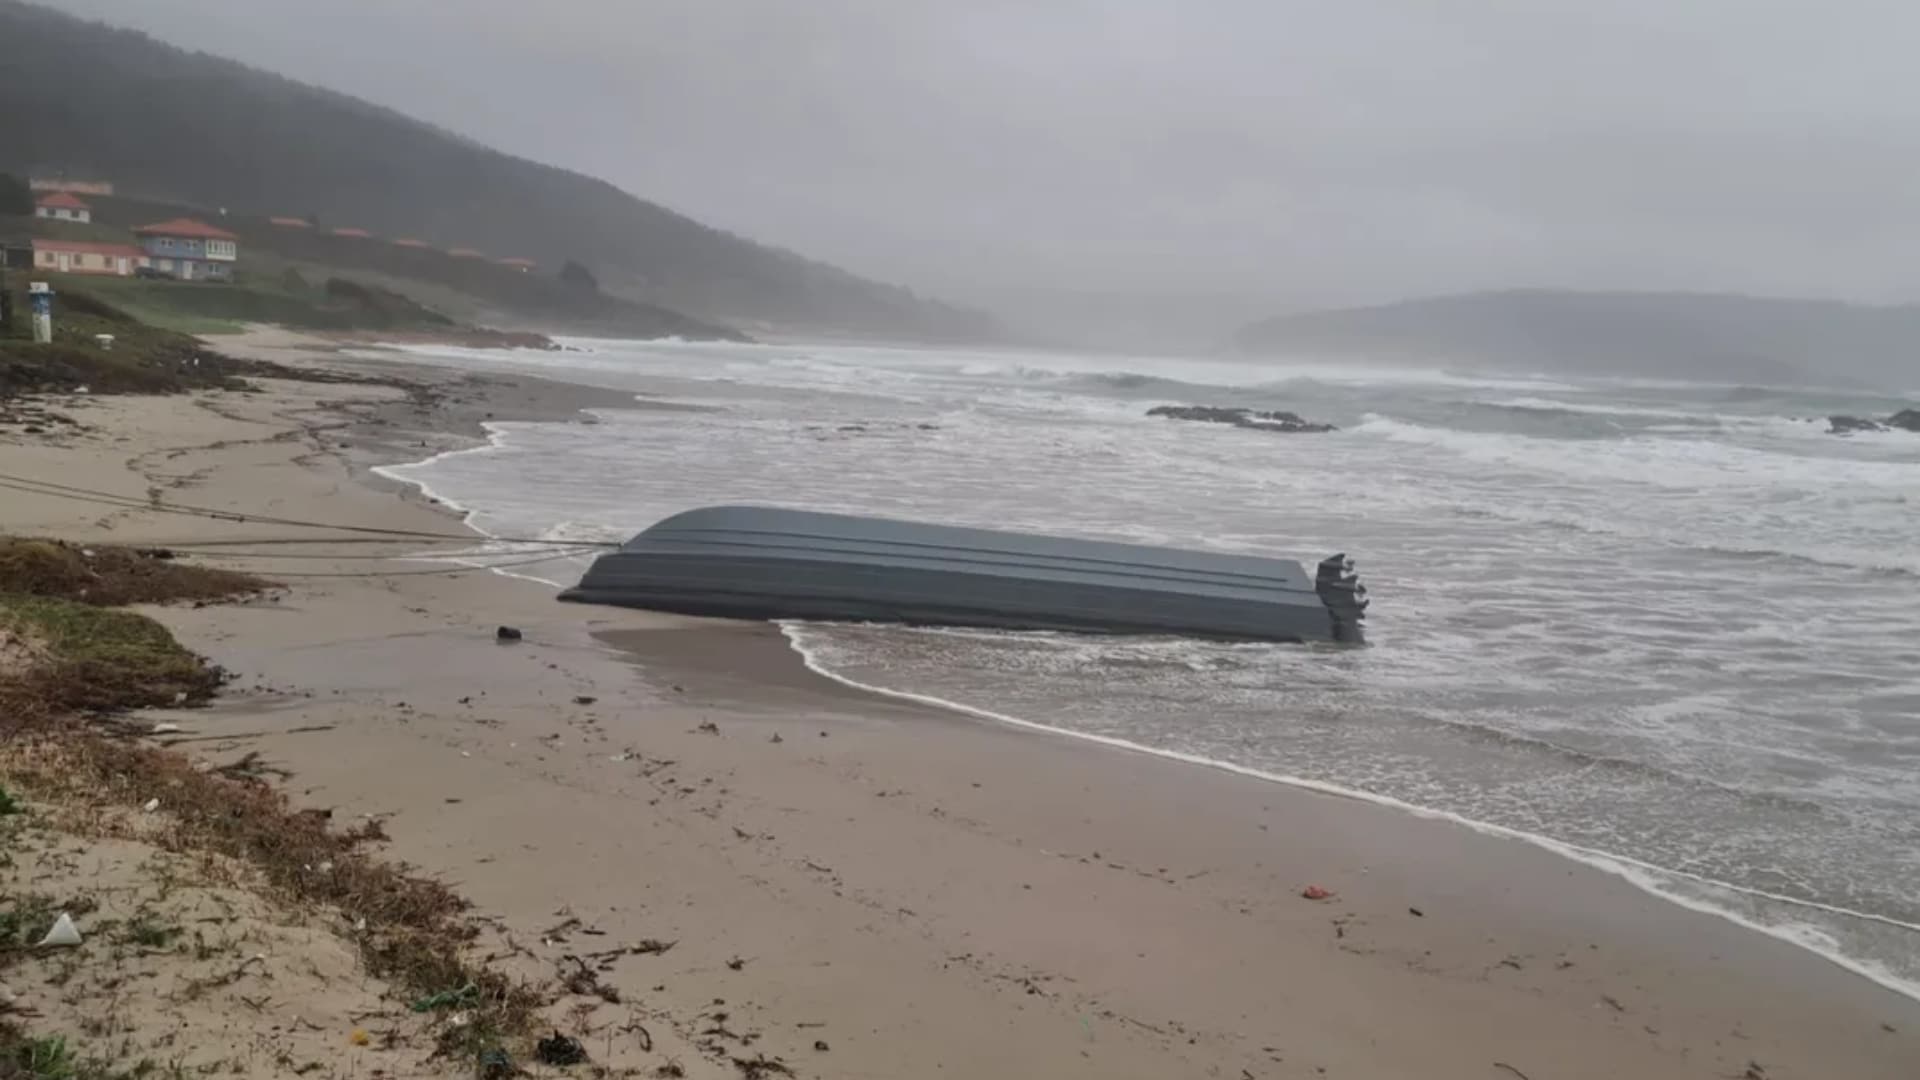 La planeadora varada en la playa de Nemiña, en Muxía | CEDIDA